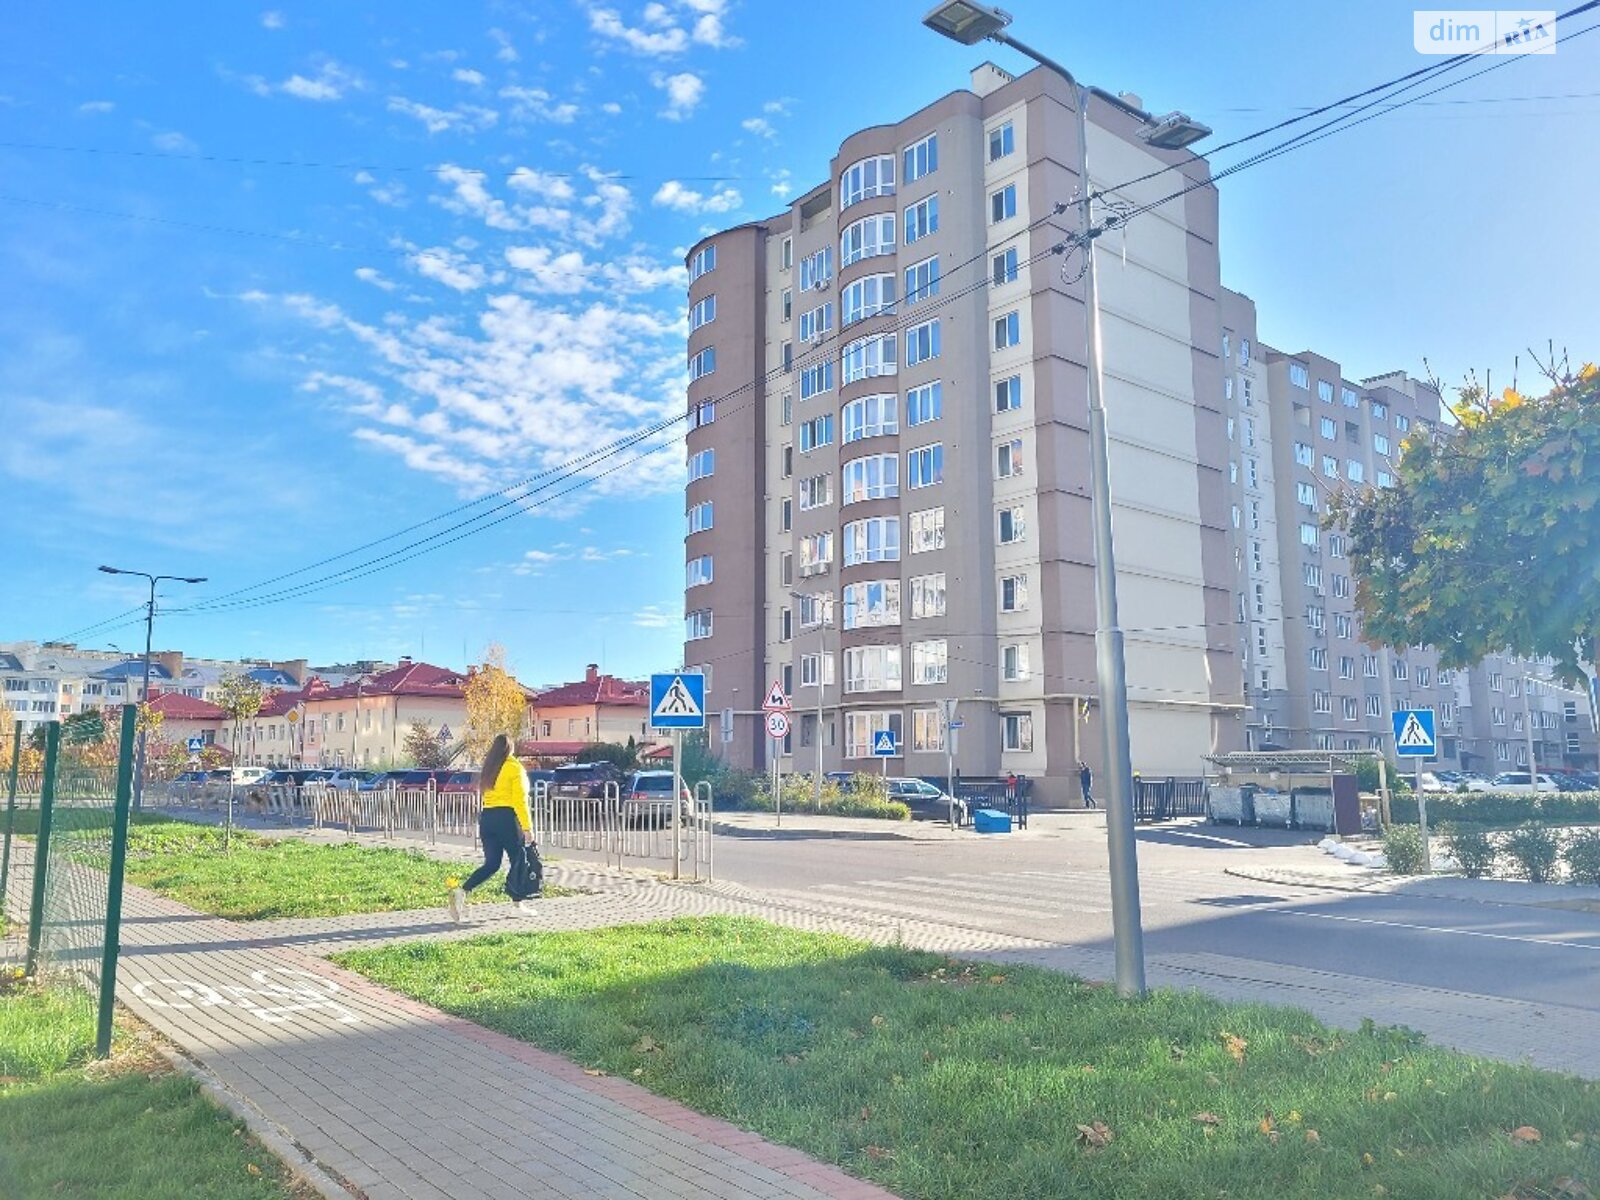 Продажа трехкомнатной квартиры в Луцке, на ул. Липинского 4, район 55 микрорайон фото 1